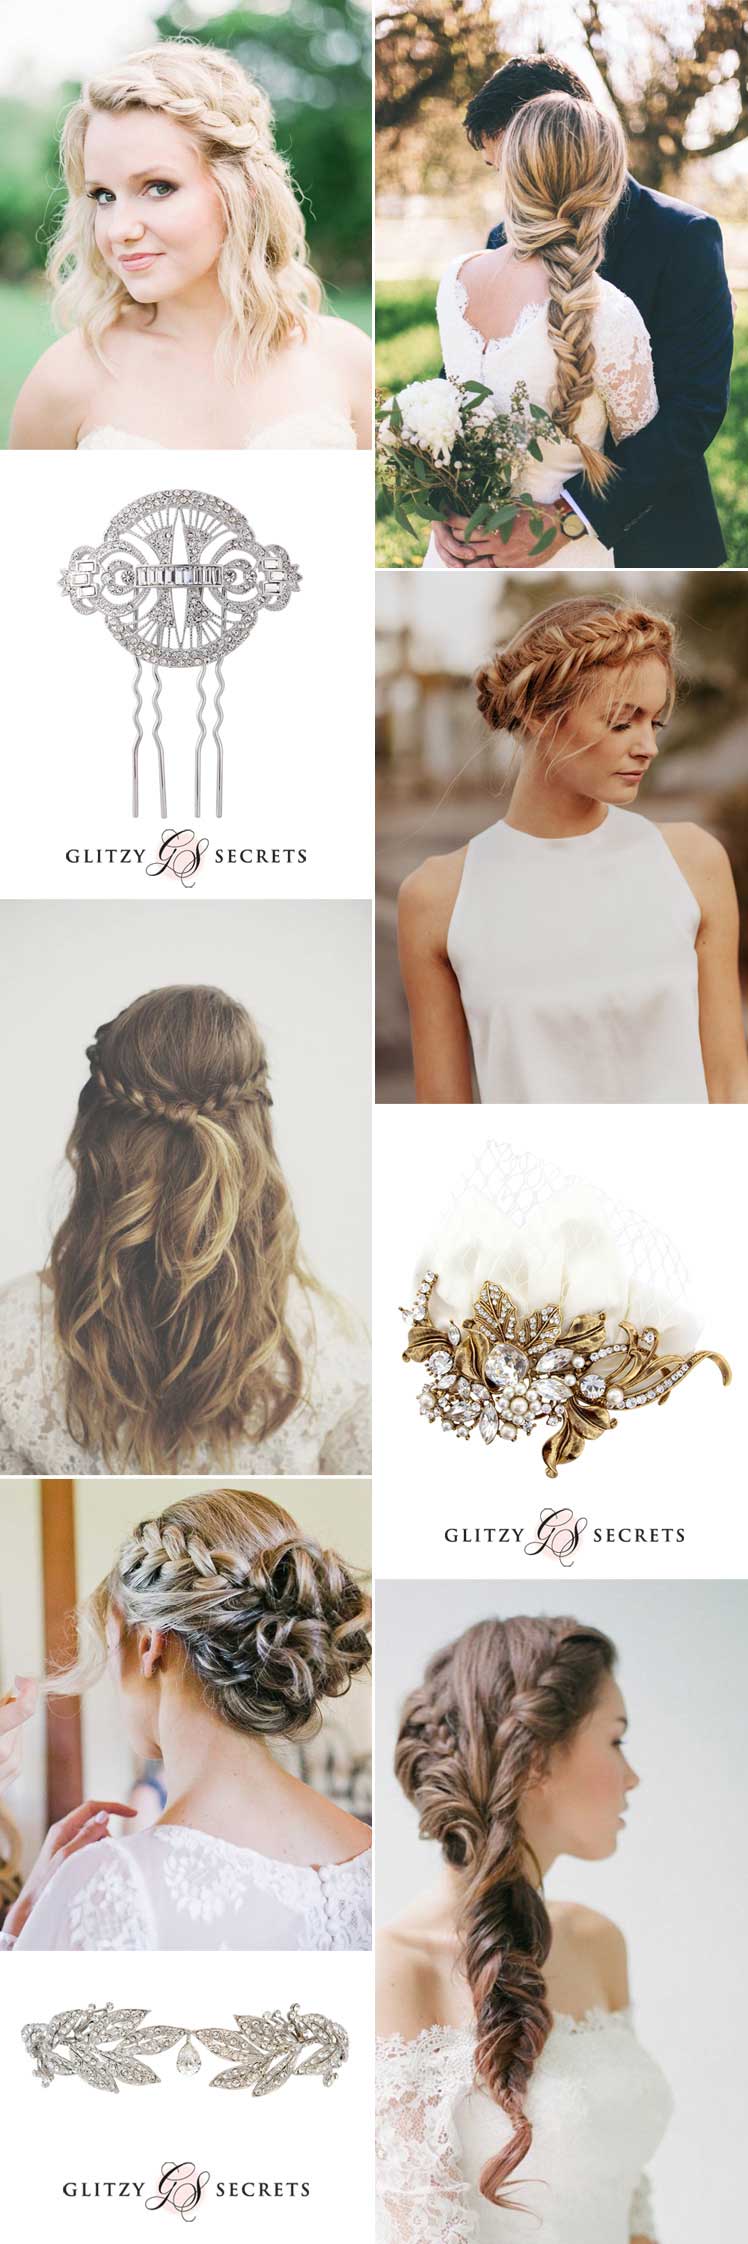 Wedding hair accessories for braids